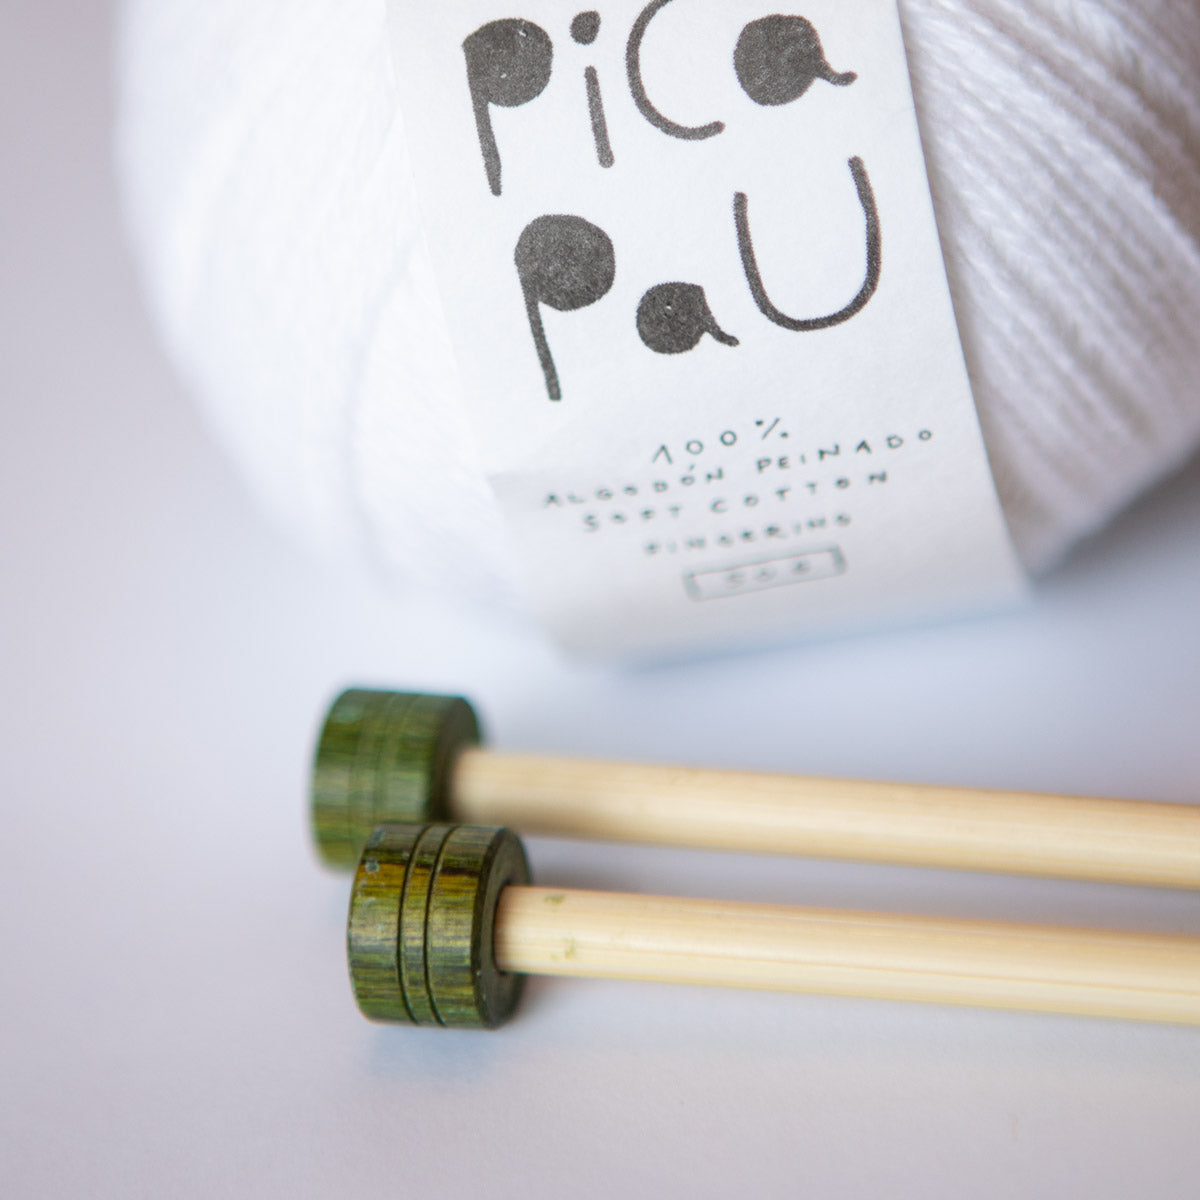 Knitter's Pride Bamboo Needles 10"